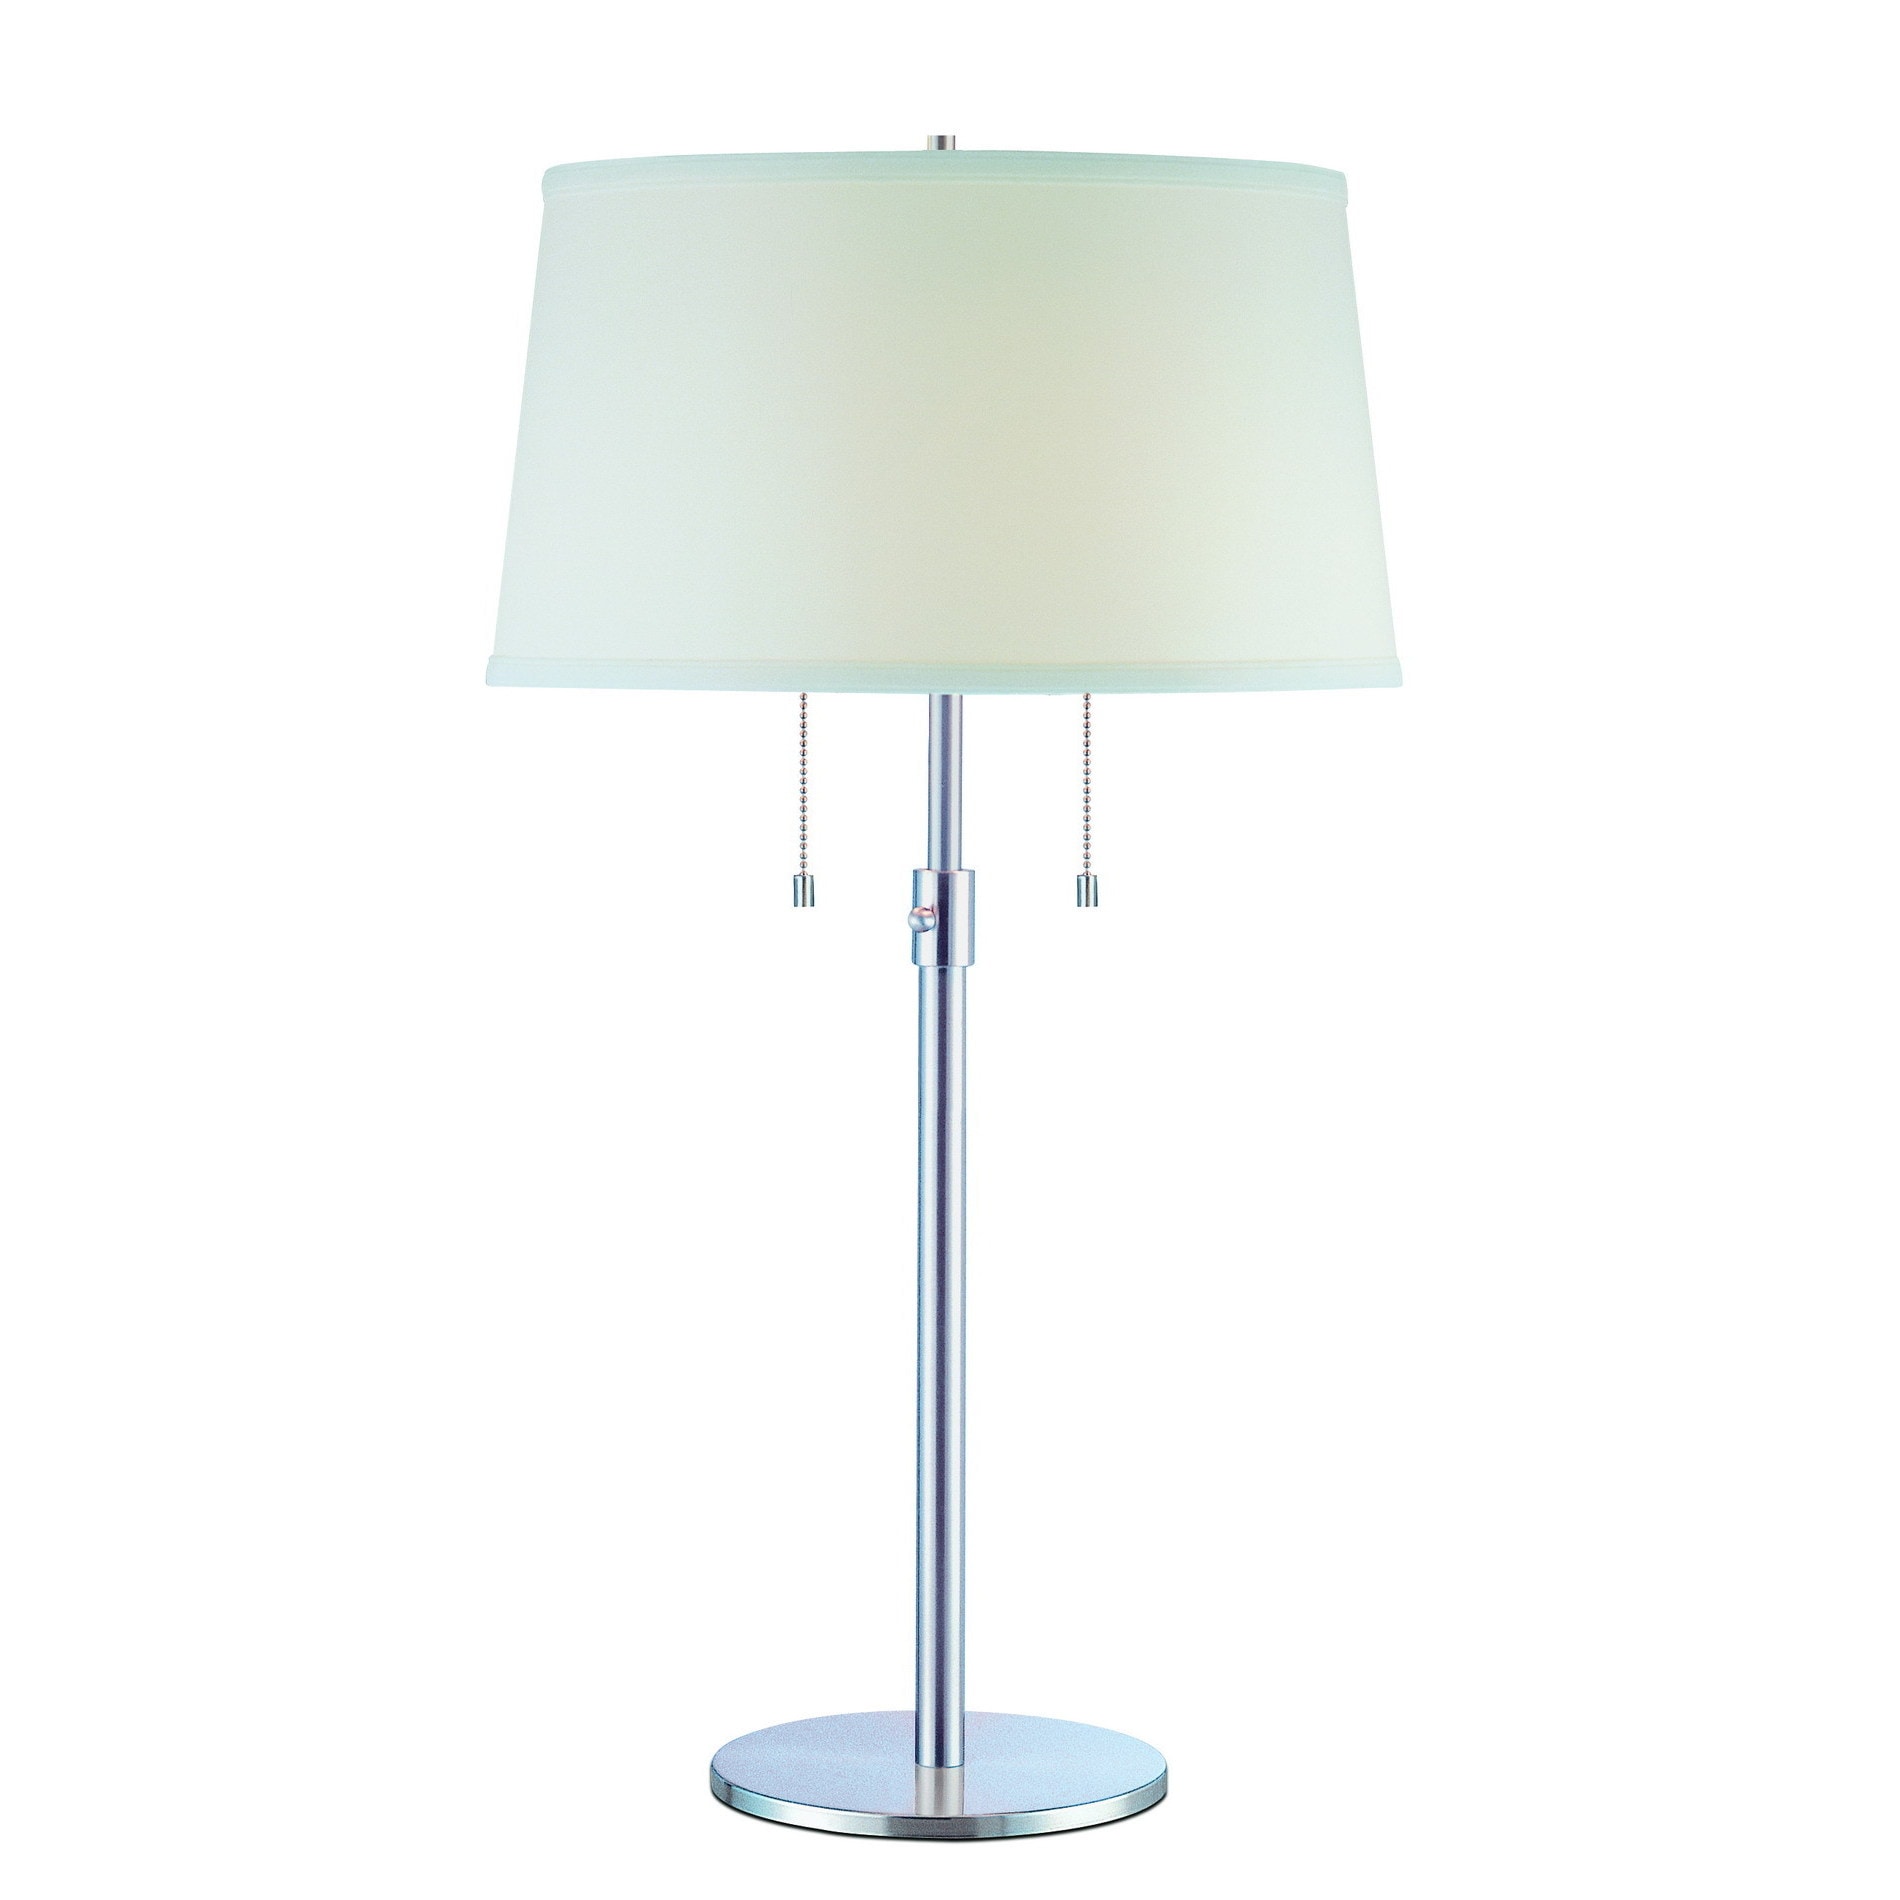 Urban Basic 2 light Polished Chrome Table Lamp